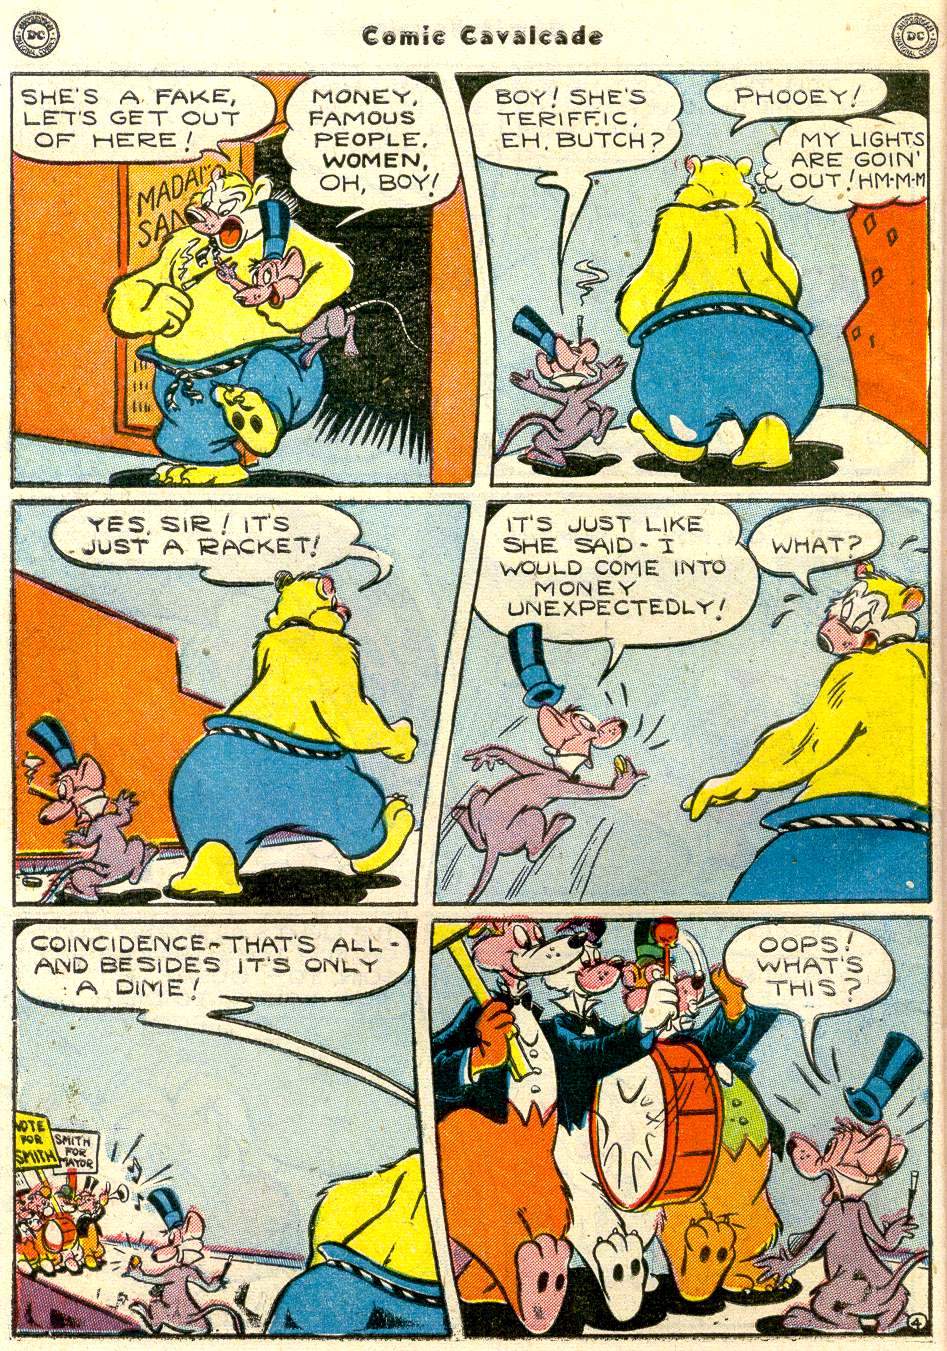 Comic Cavalcade issue 43 - Page 62